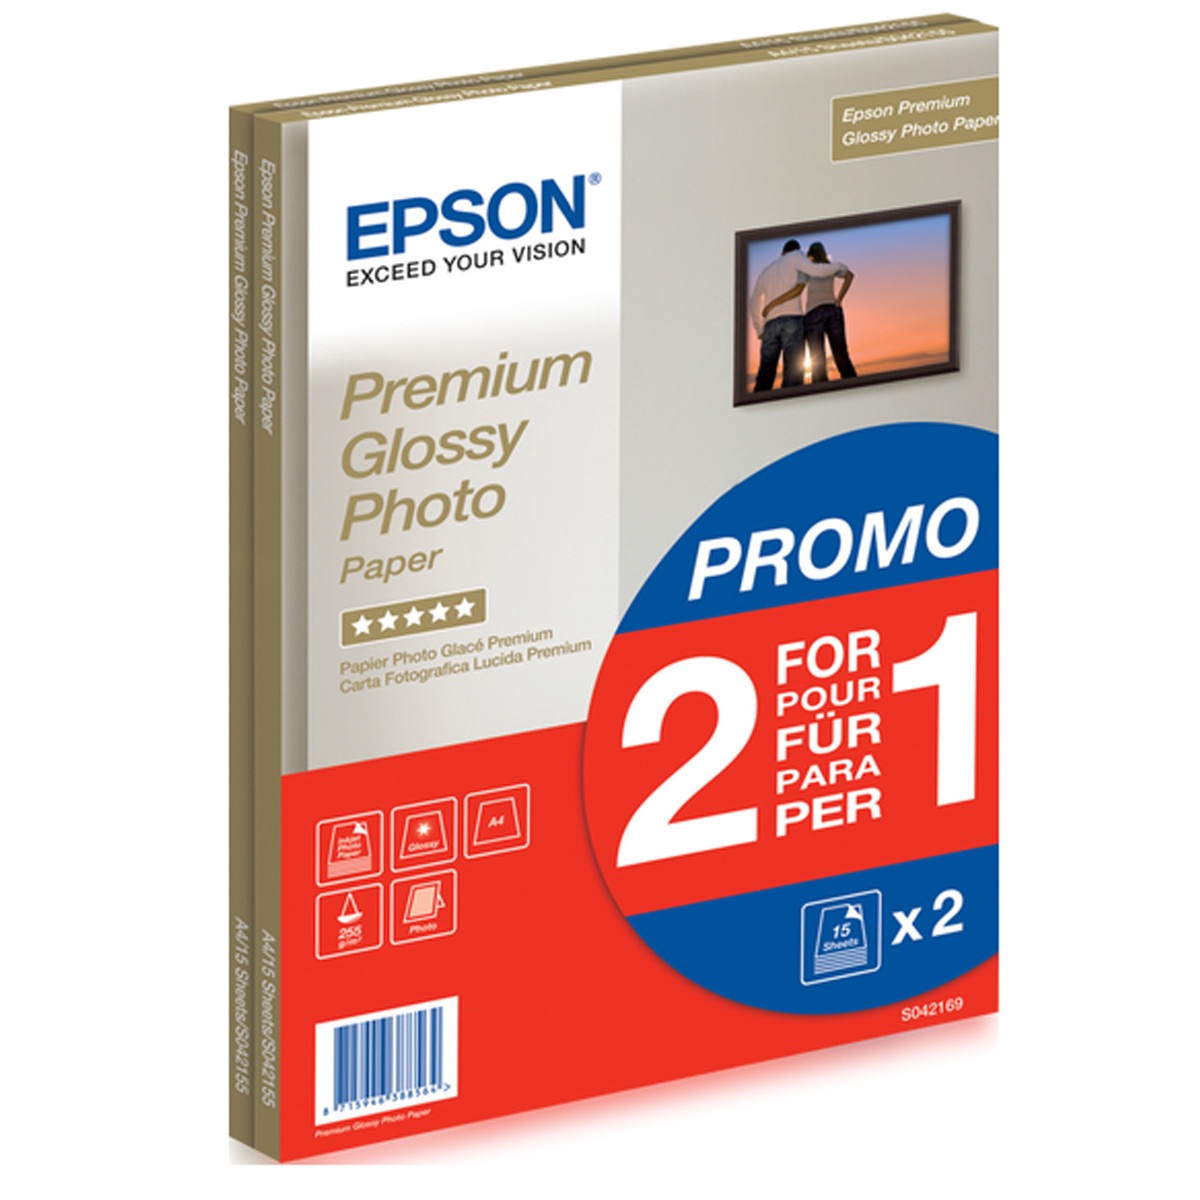 Epson Premium Glossy Photo Papier A4 2 x 15 Blatt 255 g/m²